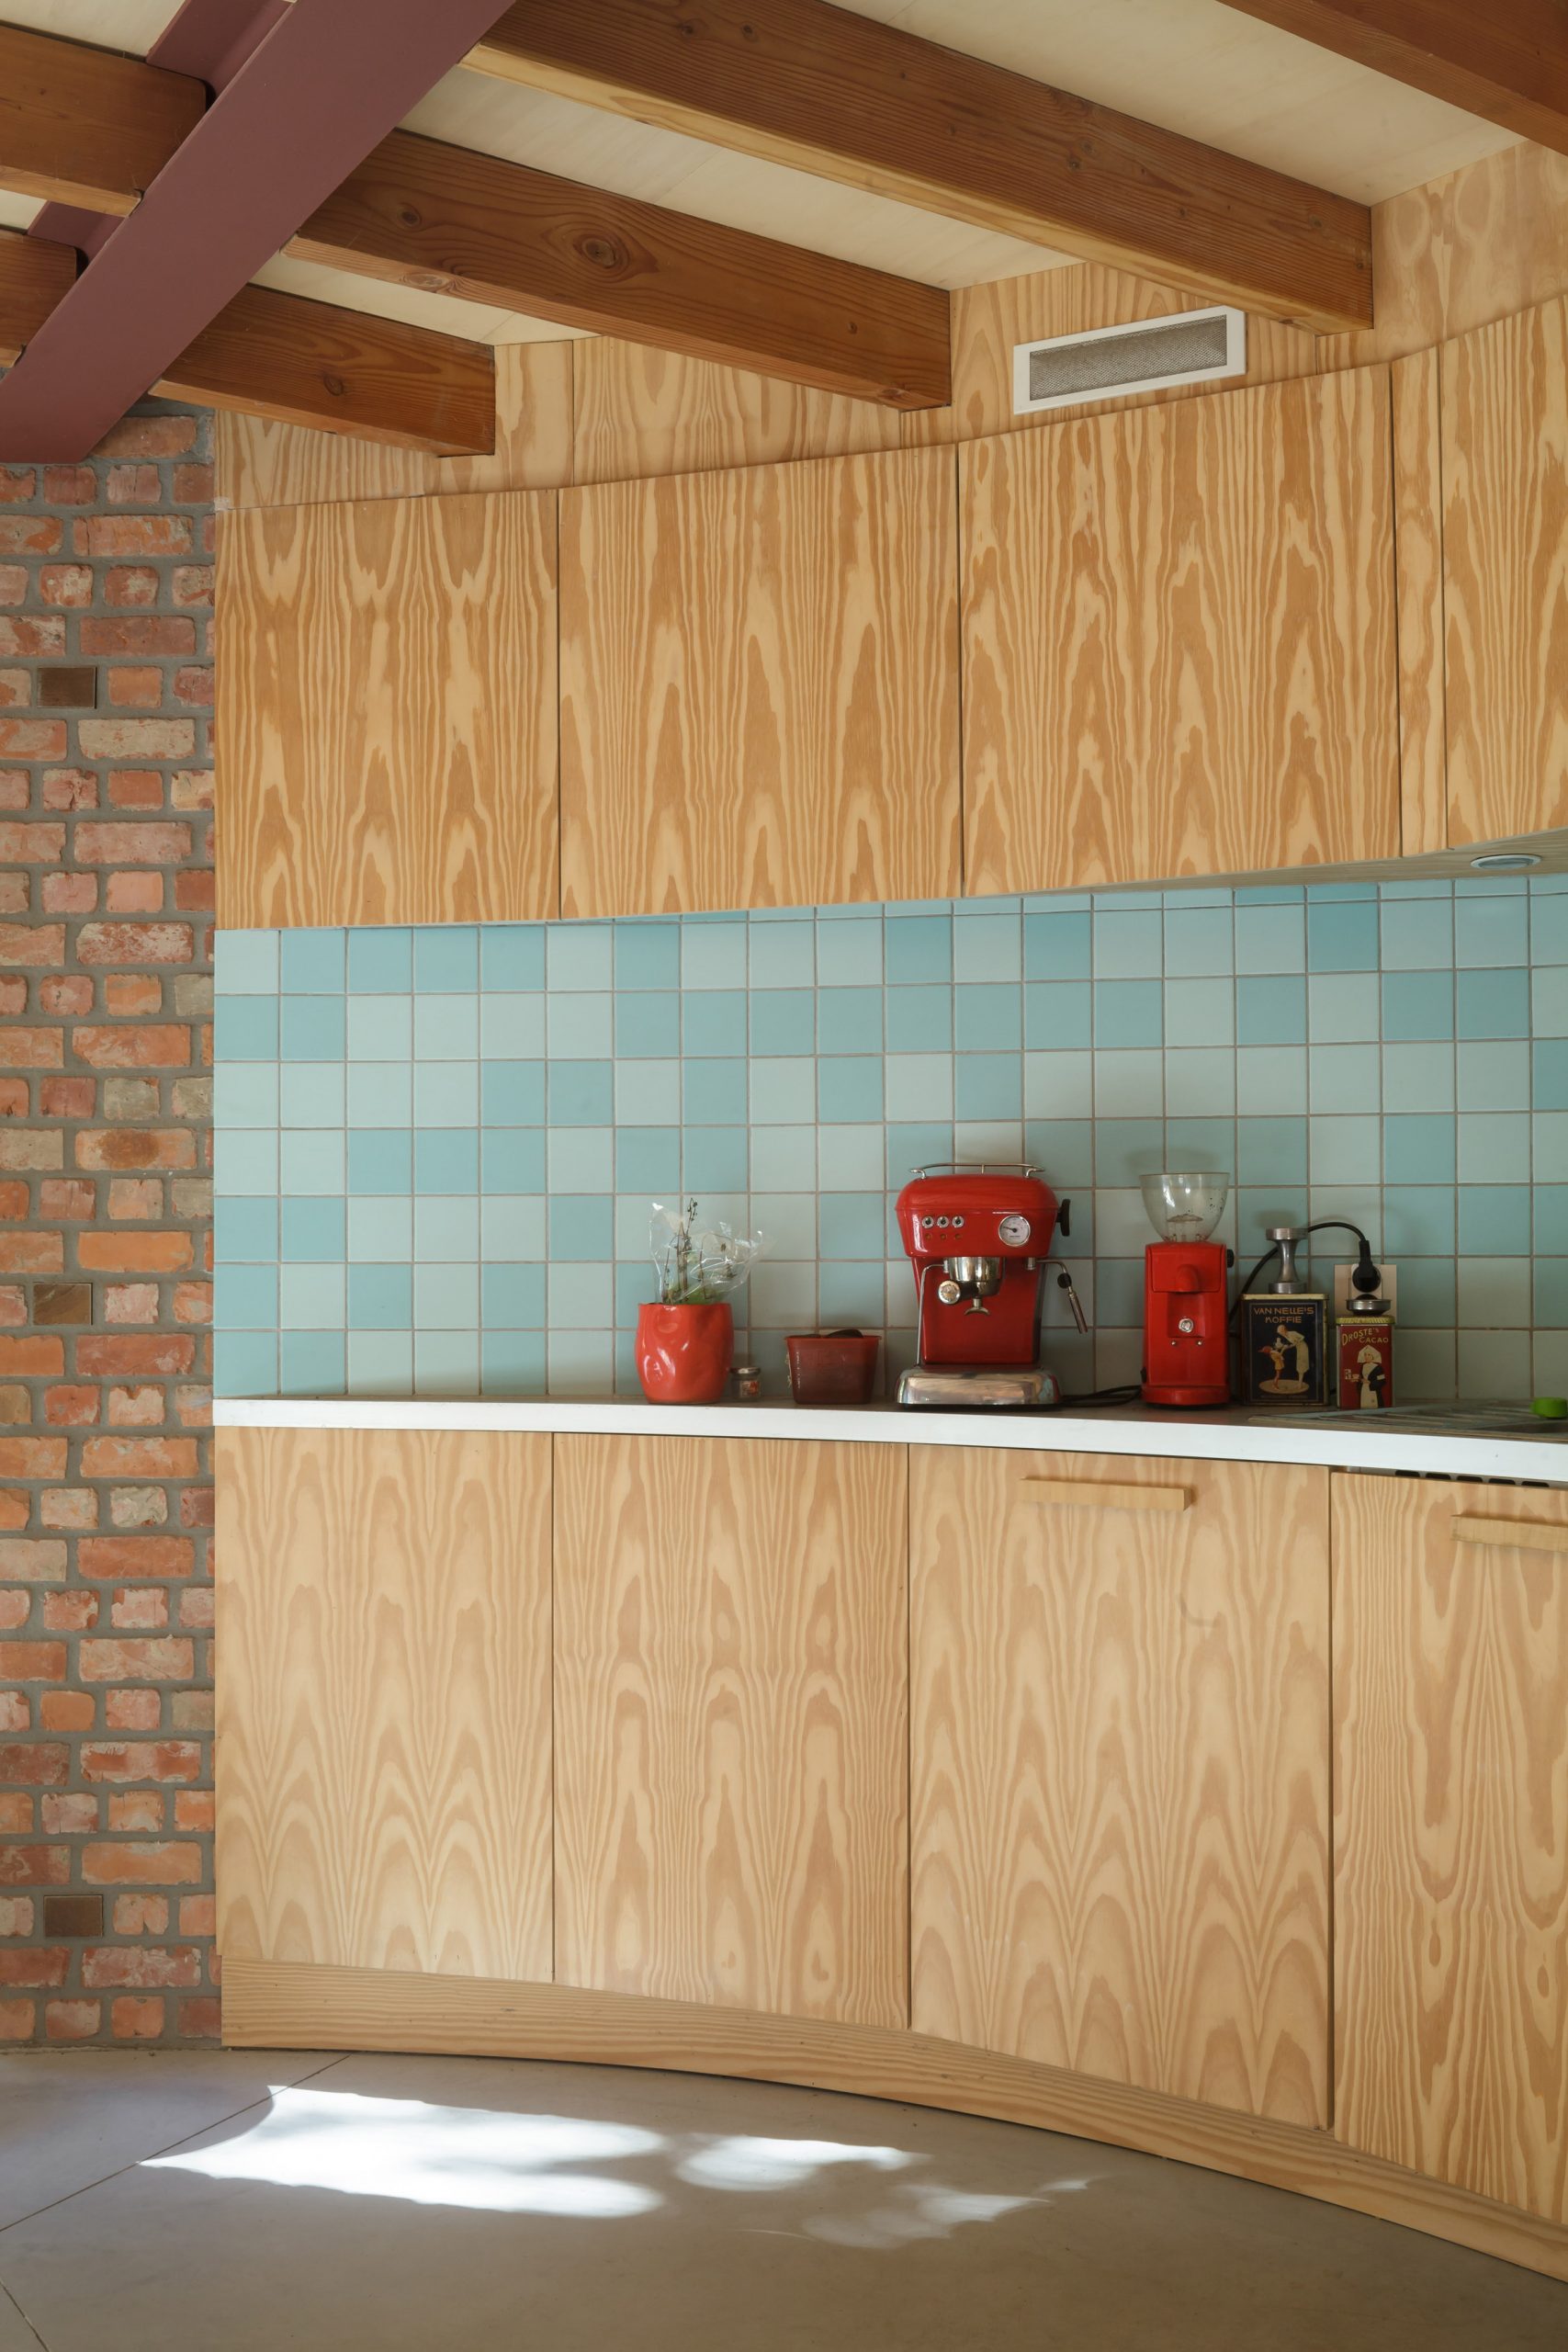 Kitchen of GjG House built of reclaimed bricks by BLAF Architecten in Ghent, Belgium